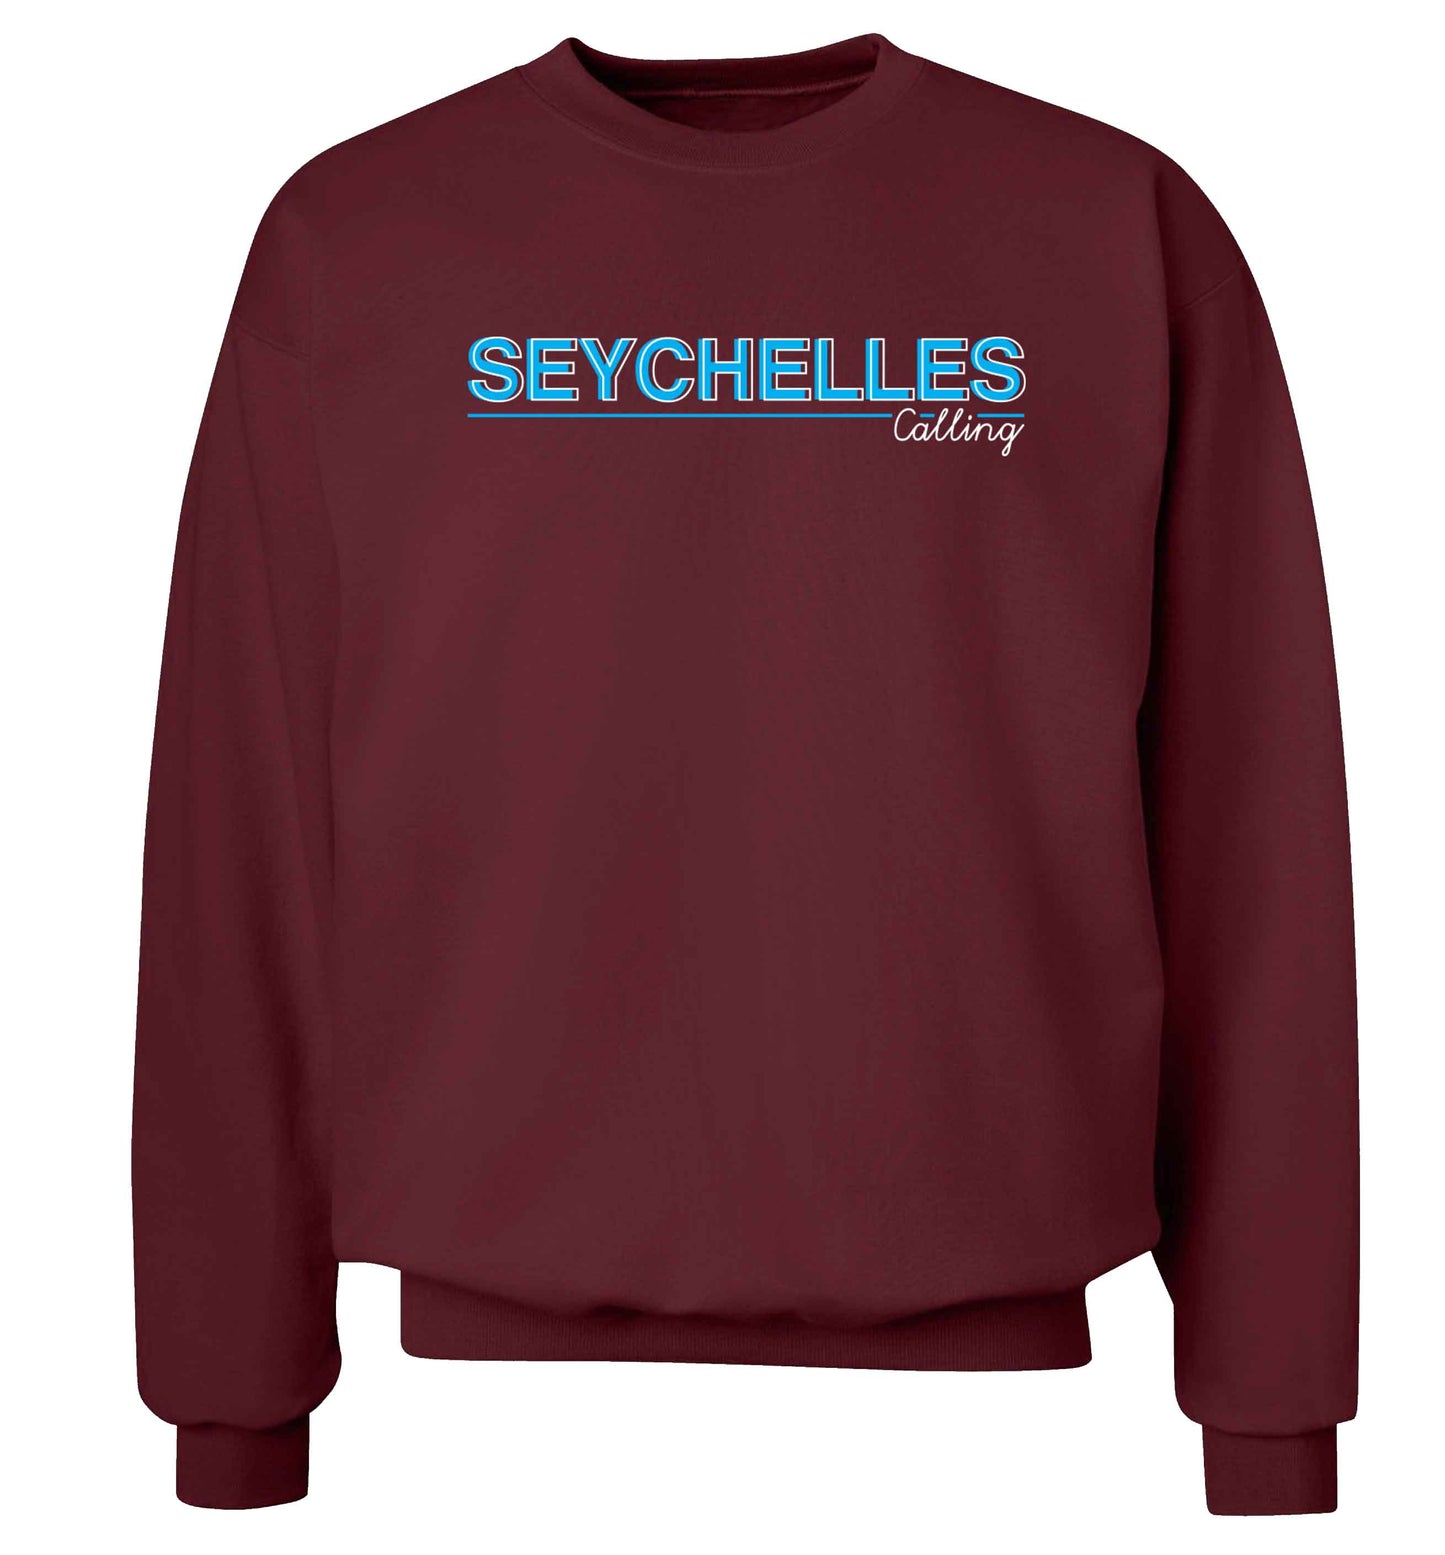 Seychelles calling Adult's unisex maroon Sweater 2XL